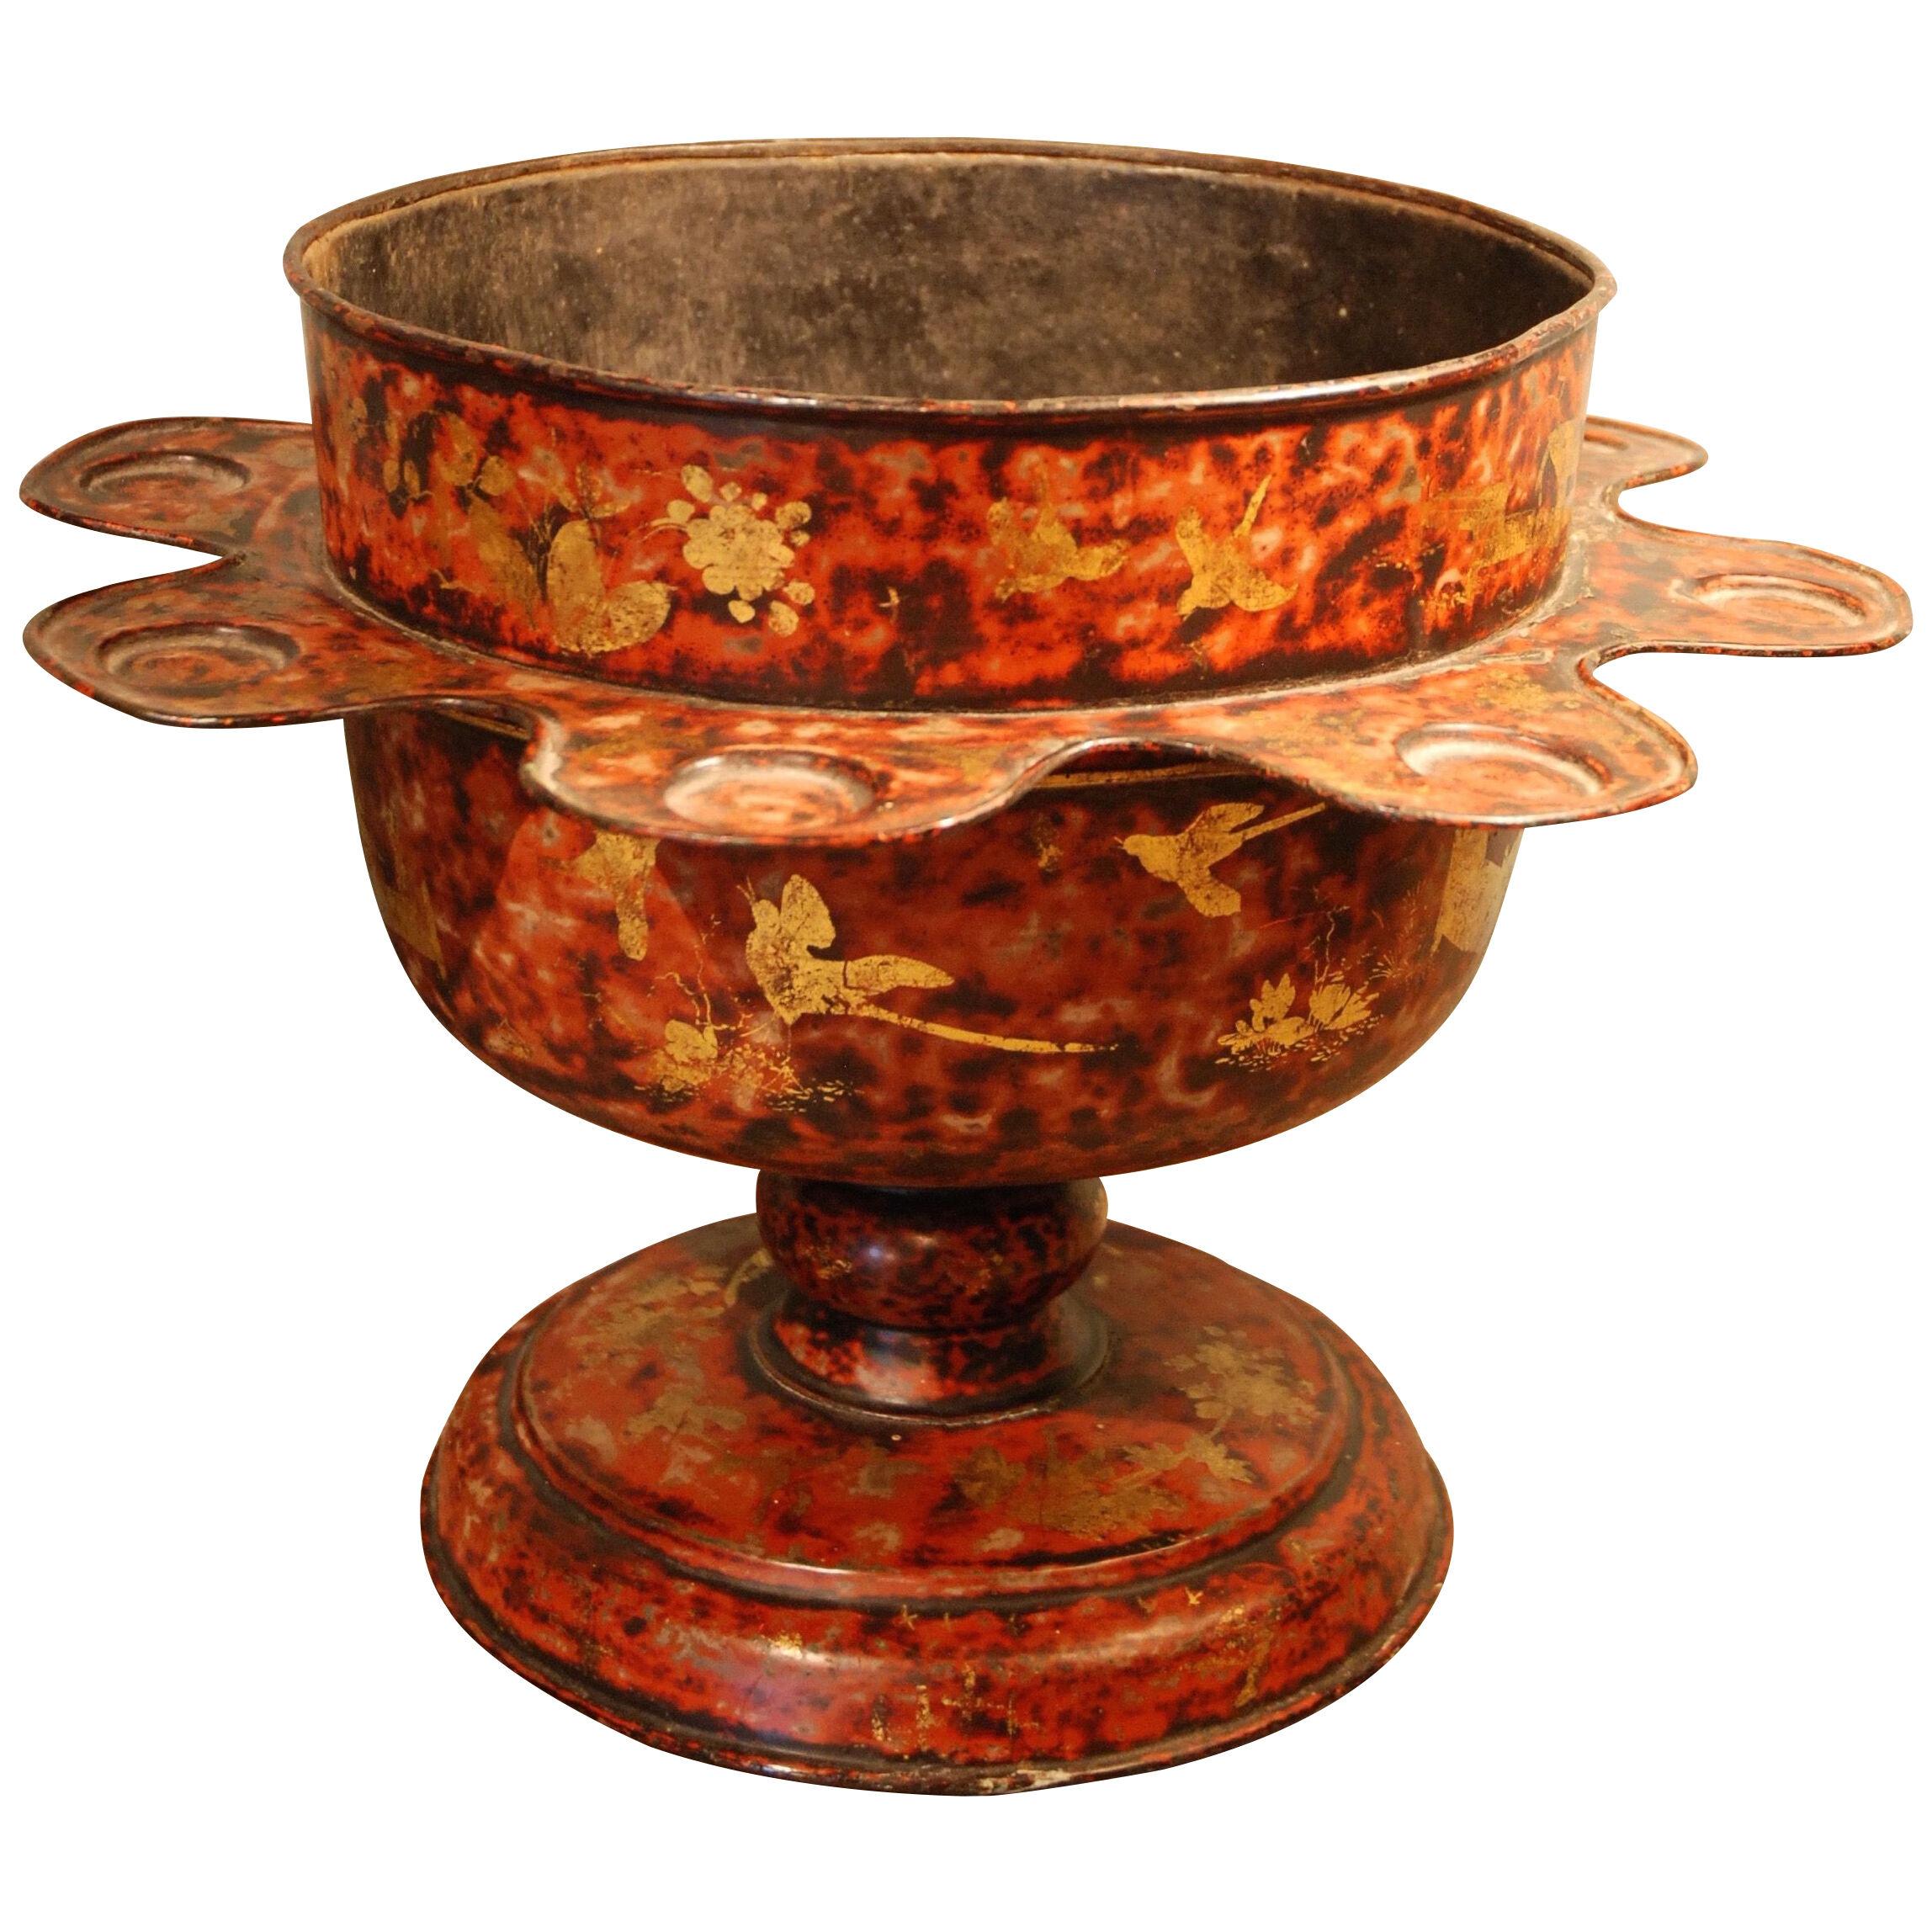 A rare tole faux red tortoiseshell wassail bowl circa 1690